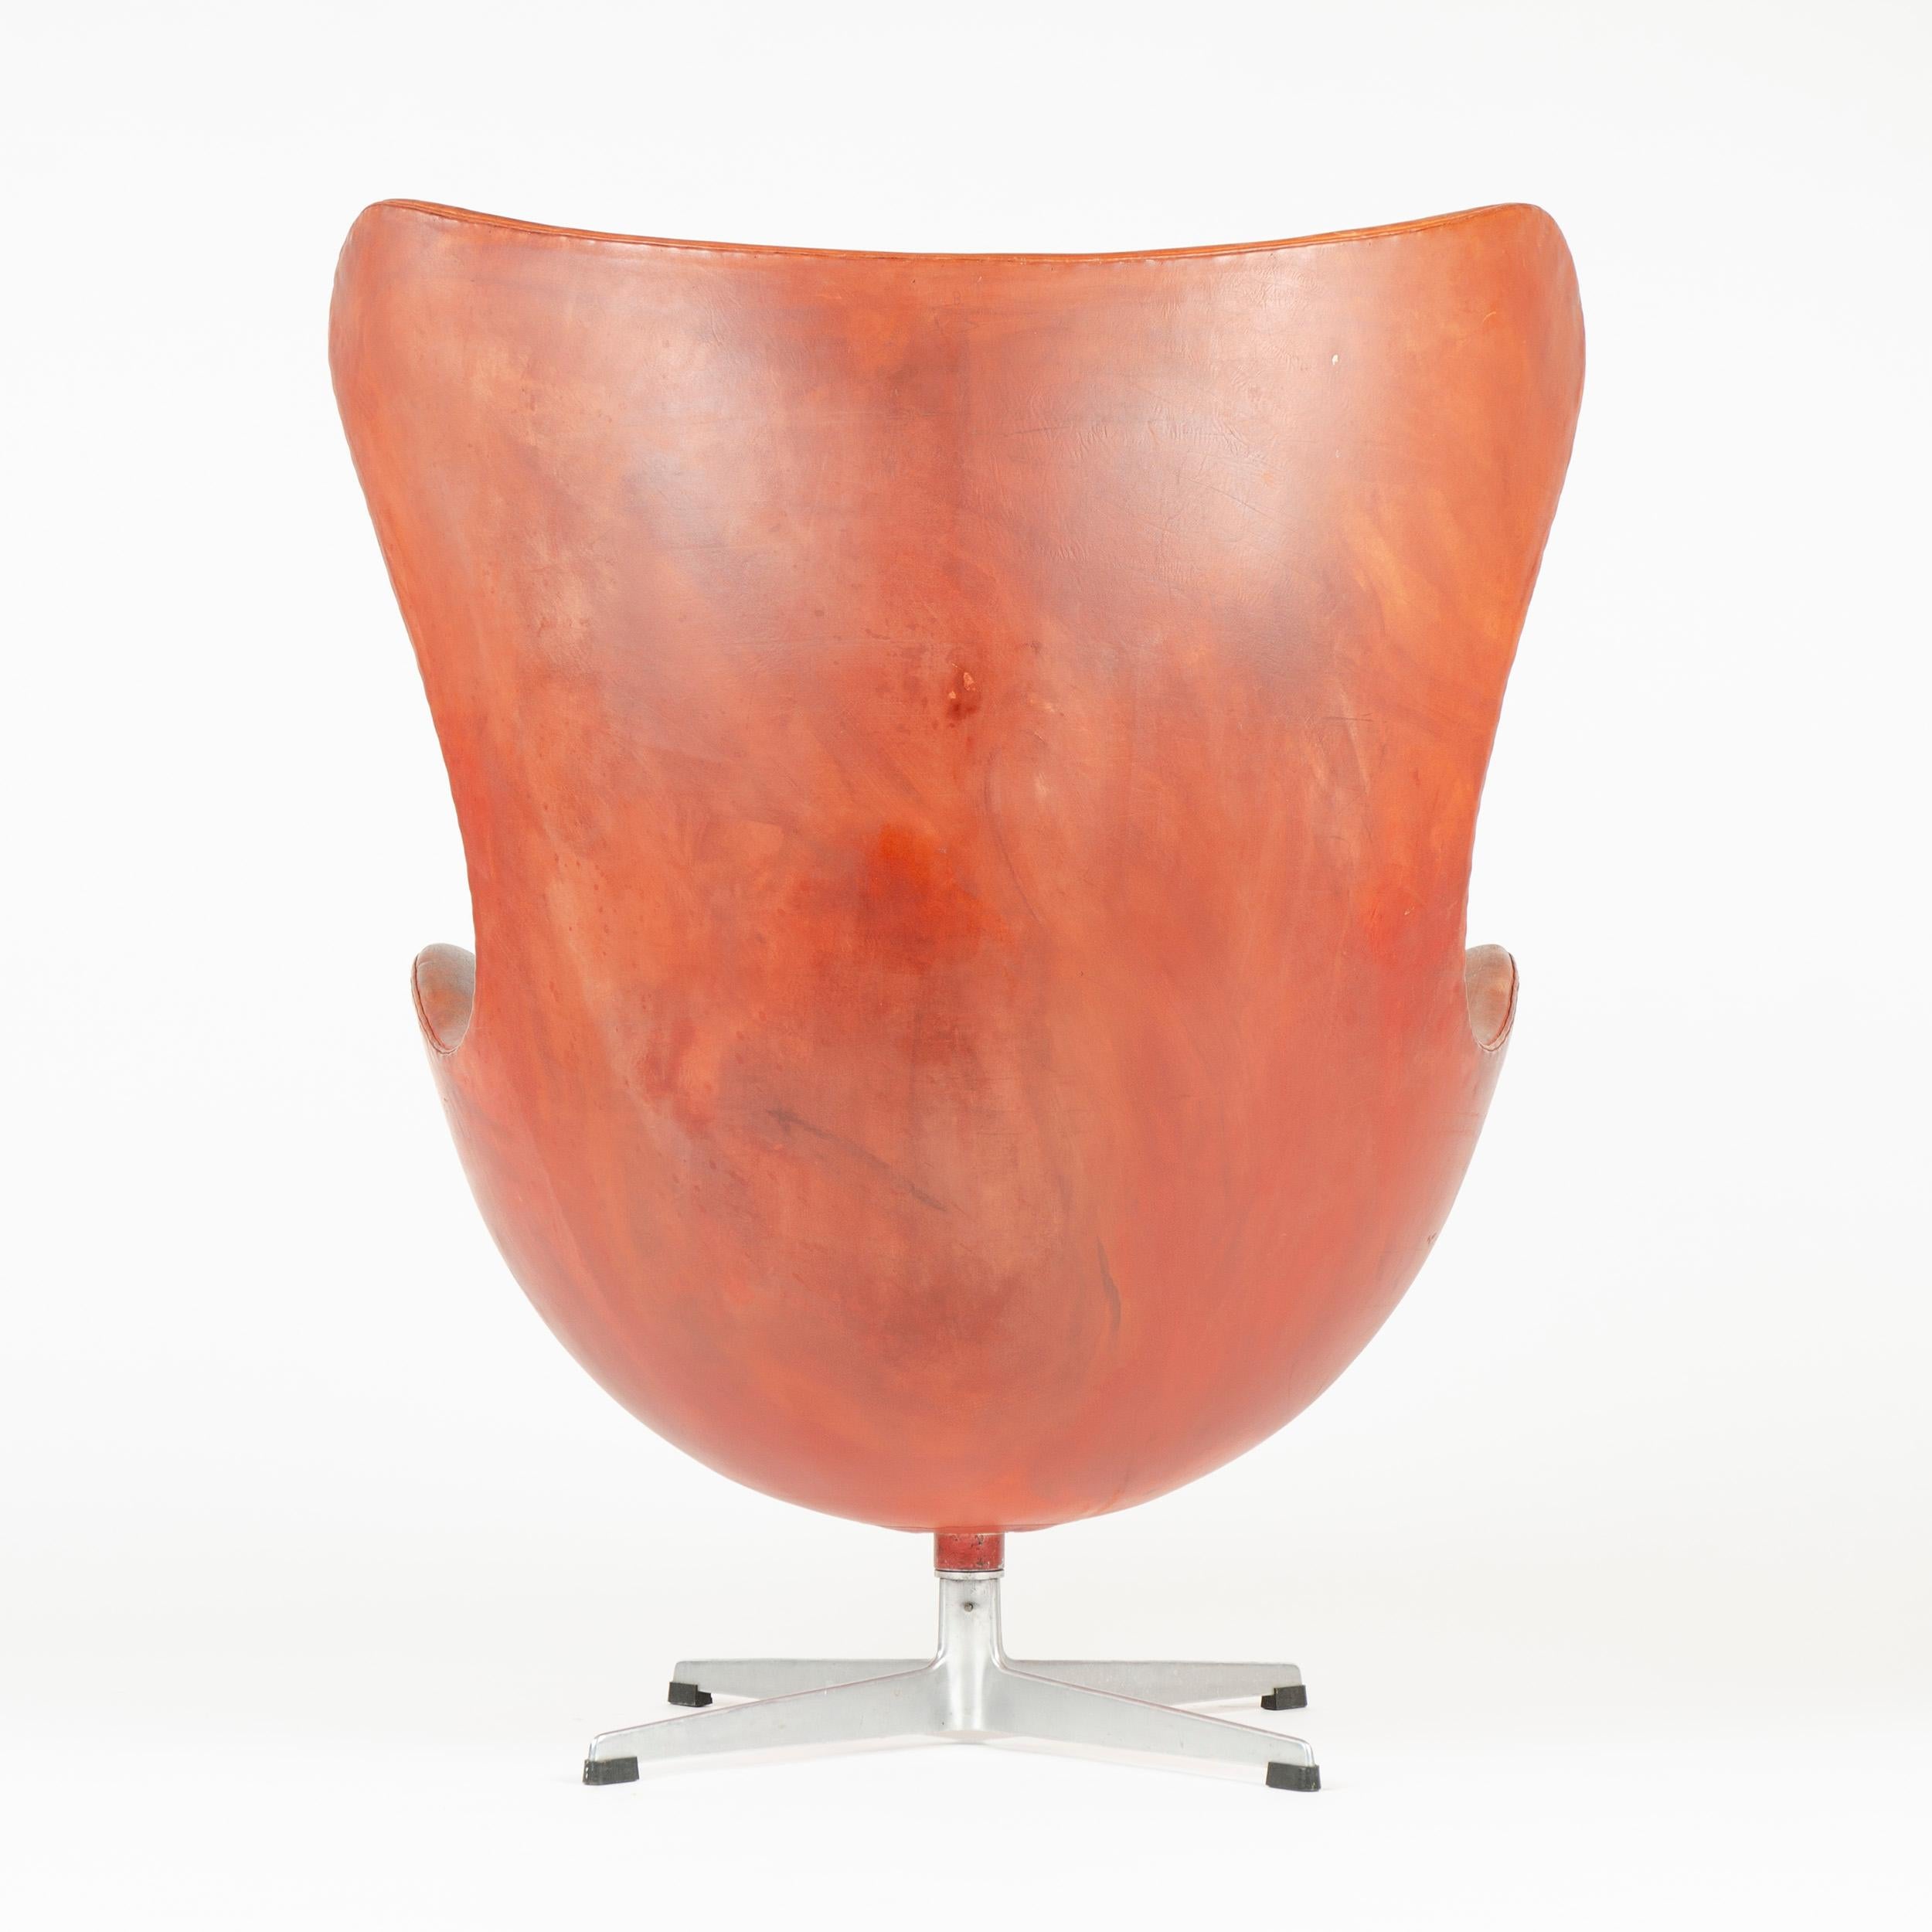 Mid-20th Century 1950s Scandinavian Modern Lounge Chair by Arne Jacobsen for Fritz Hansen